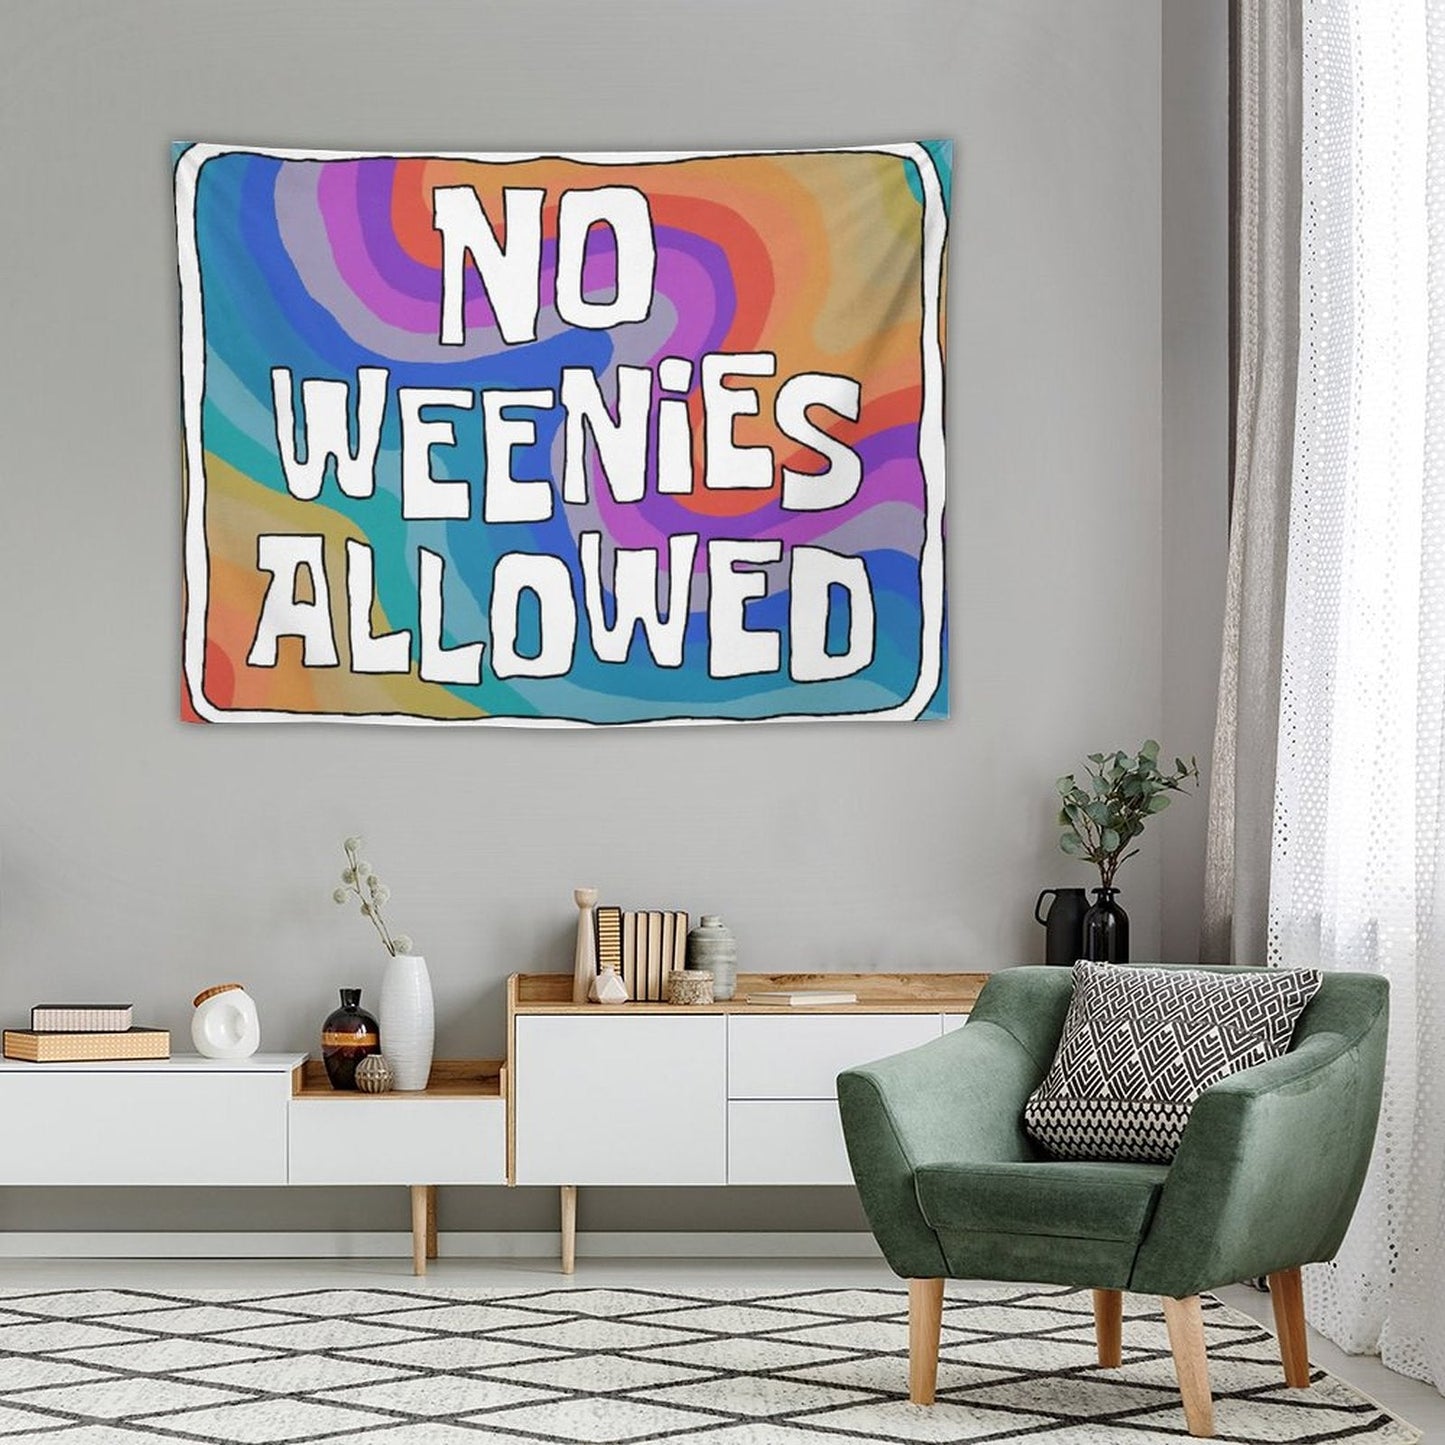 No Weenies Allowed Tapestry